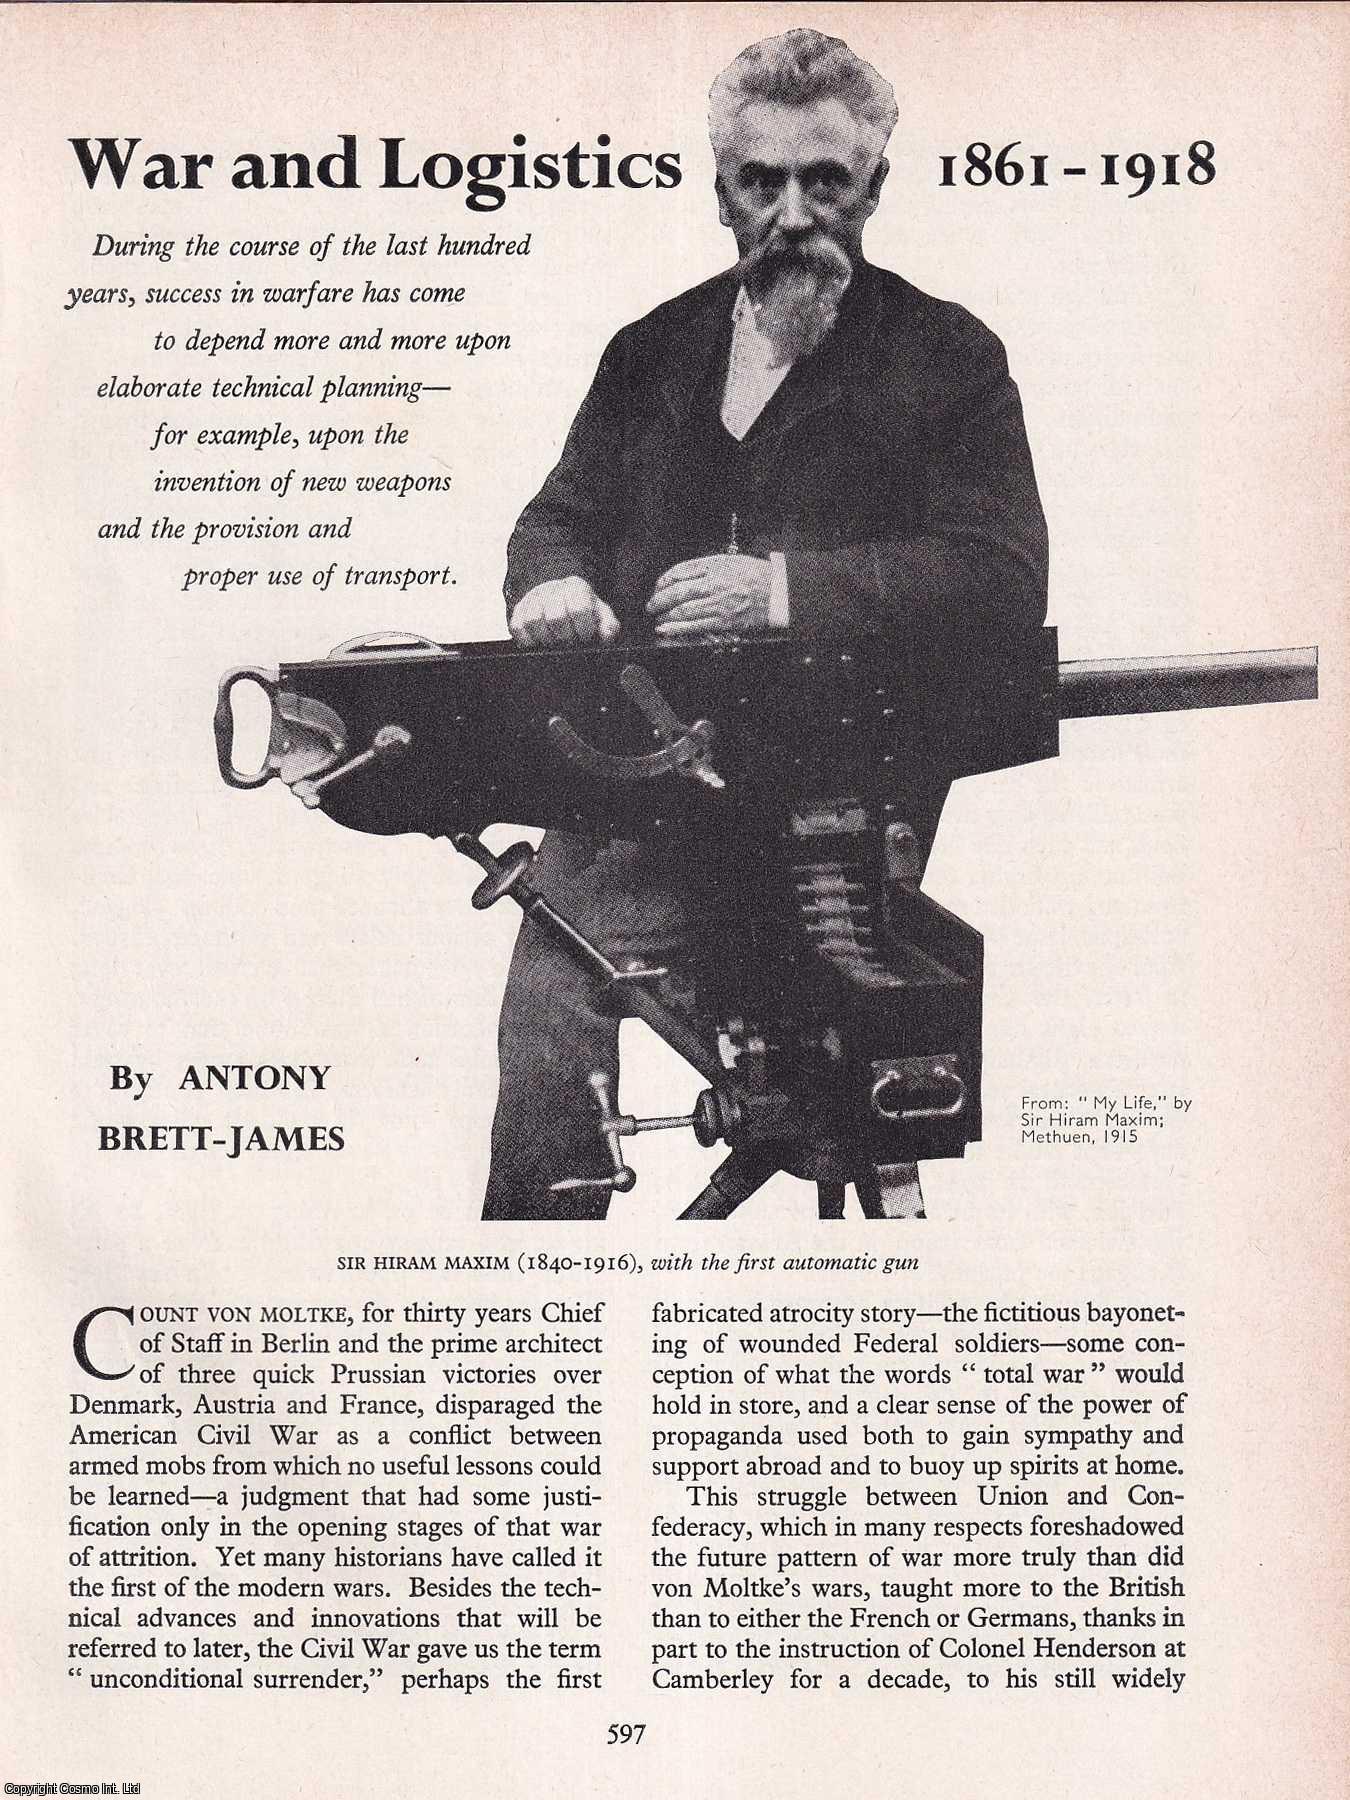 Antony Brett-James - War and Logistics 1861-1918. An original article from History Today magazine, 1964.